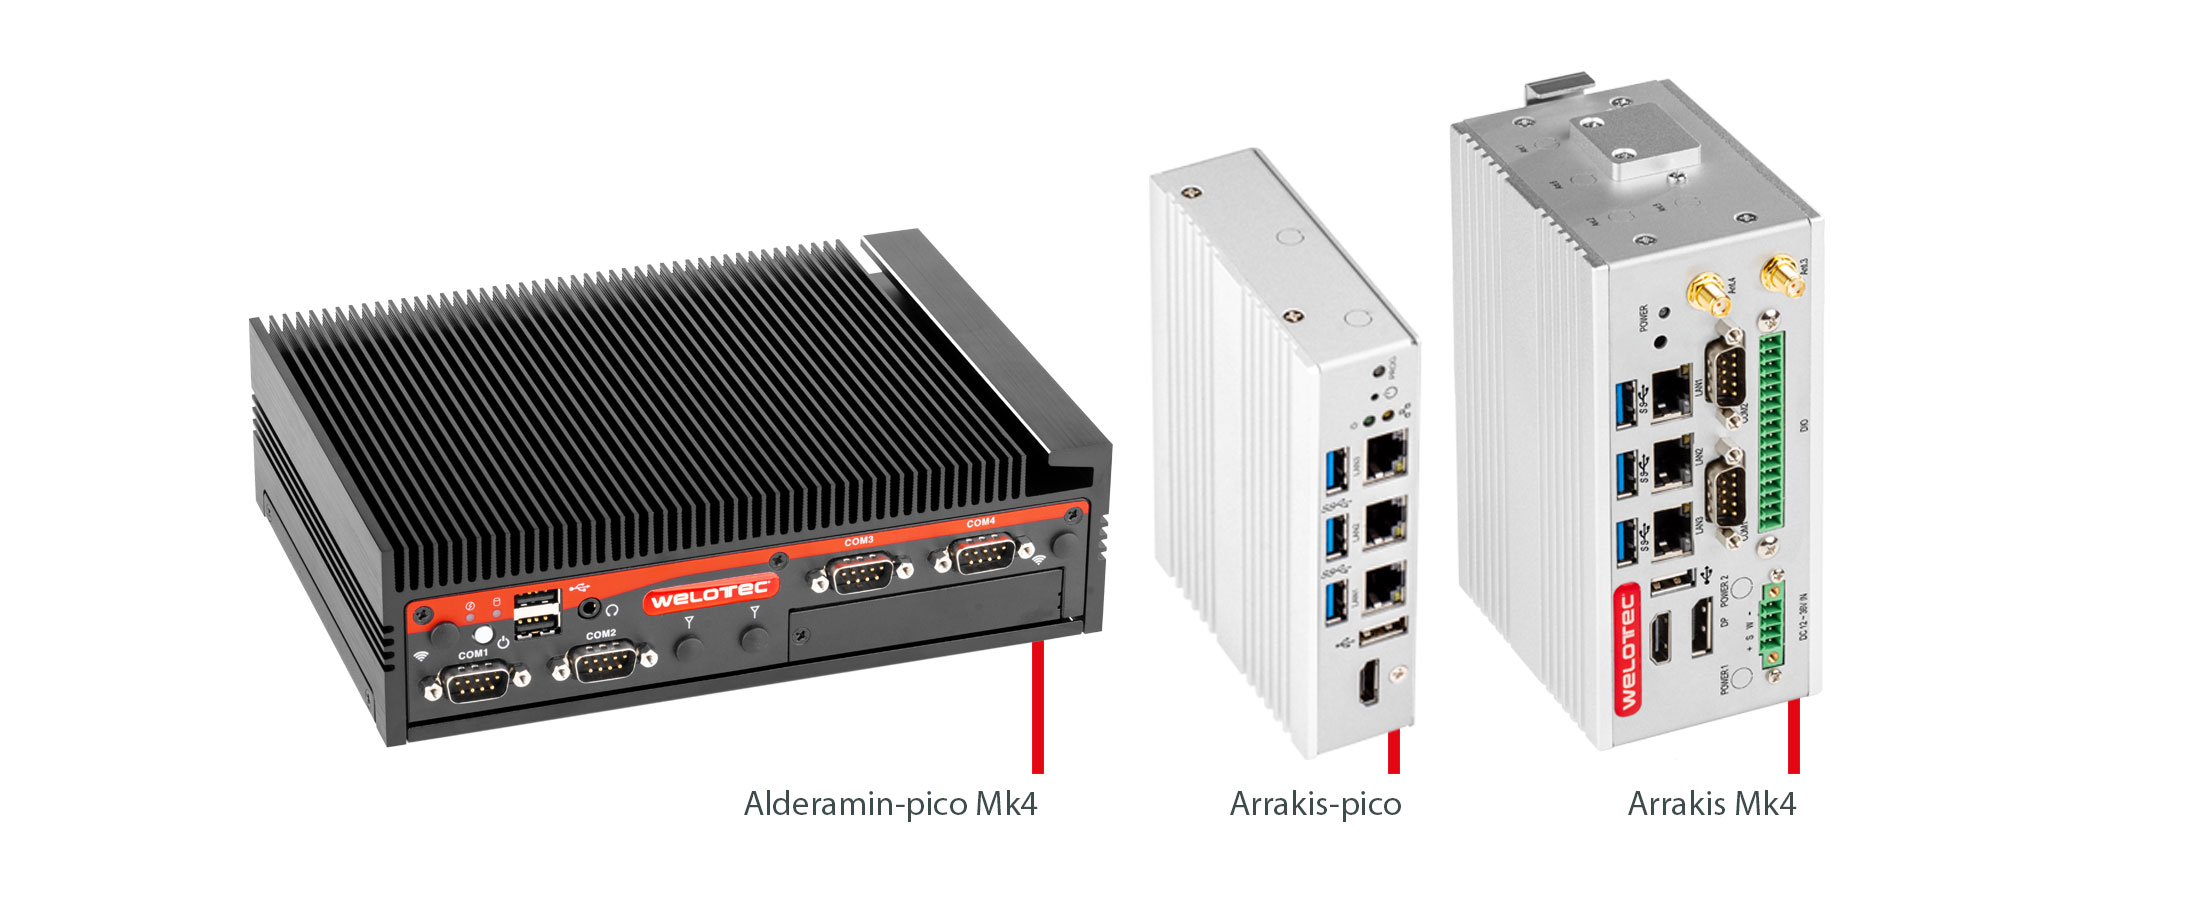 Produktgruppe Arrakis Mk4 und Alderamin pico - Industrie vs. Substation PC